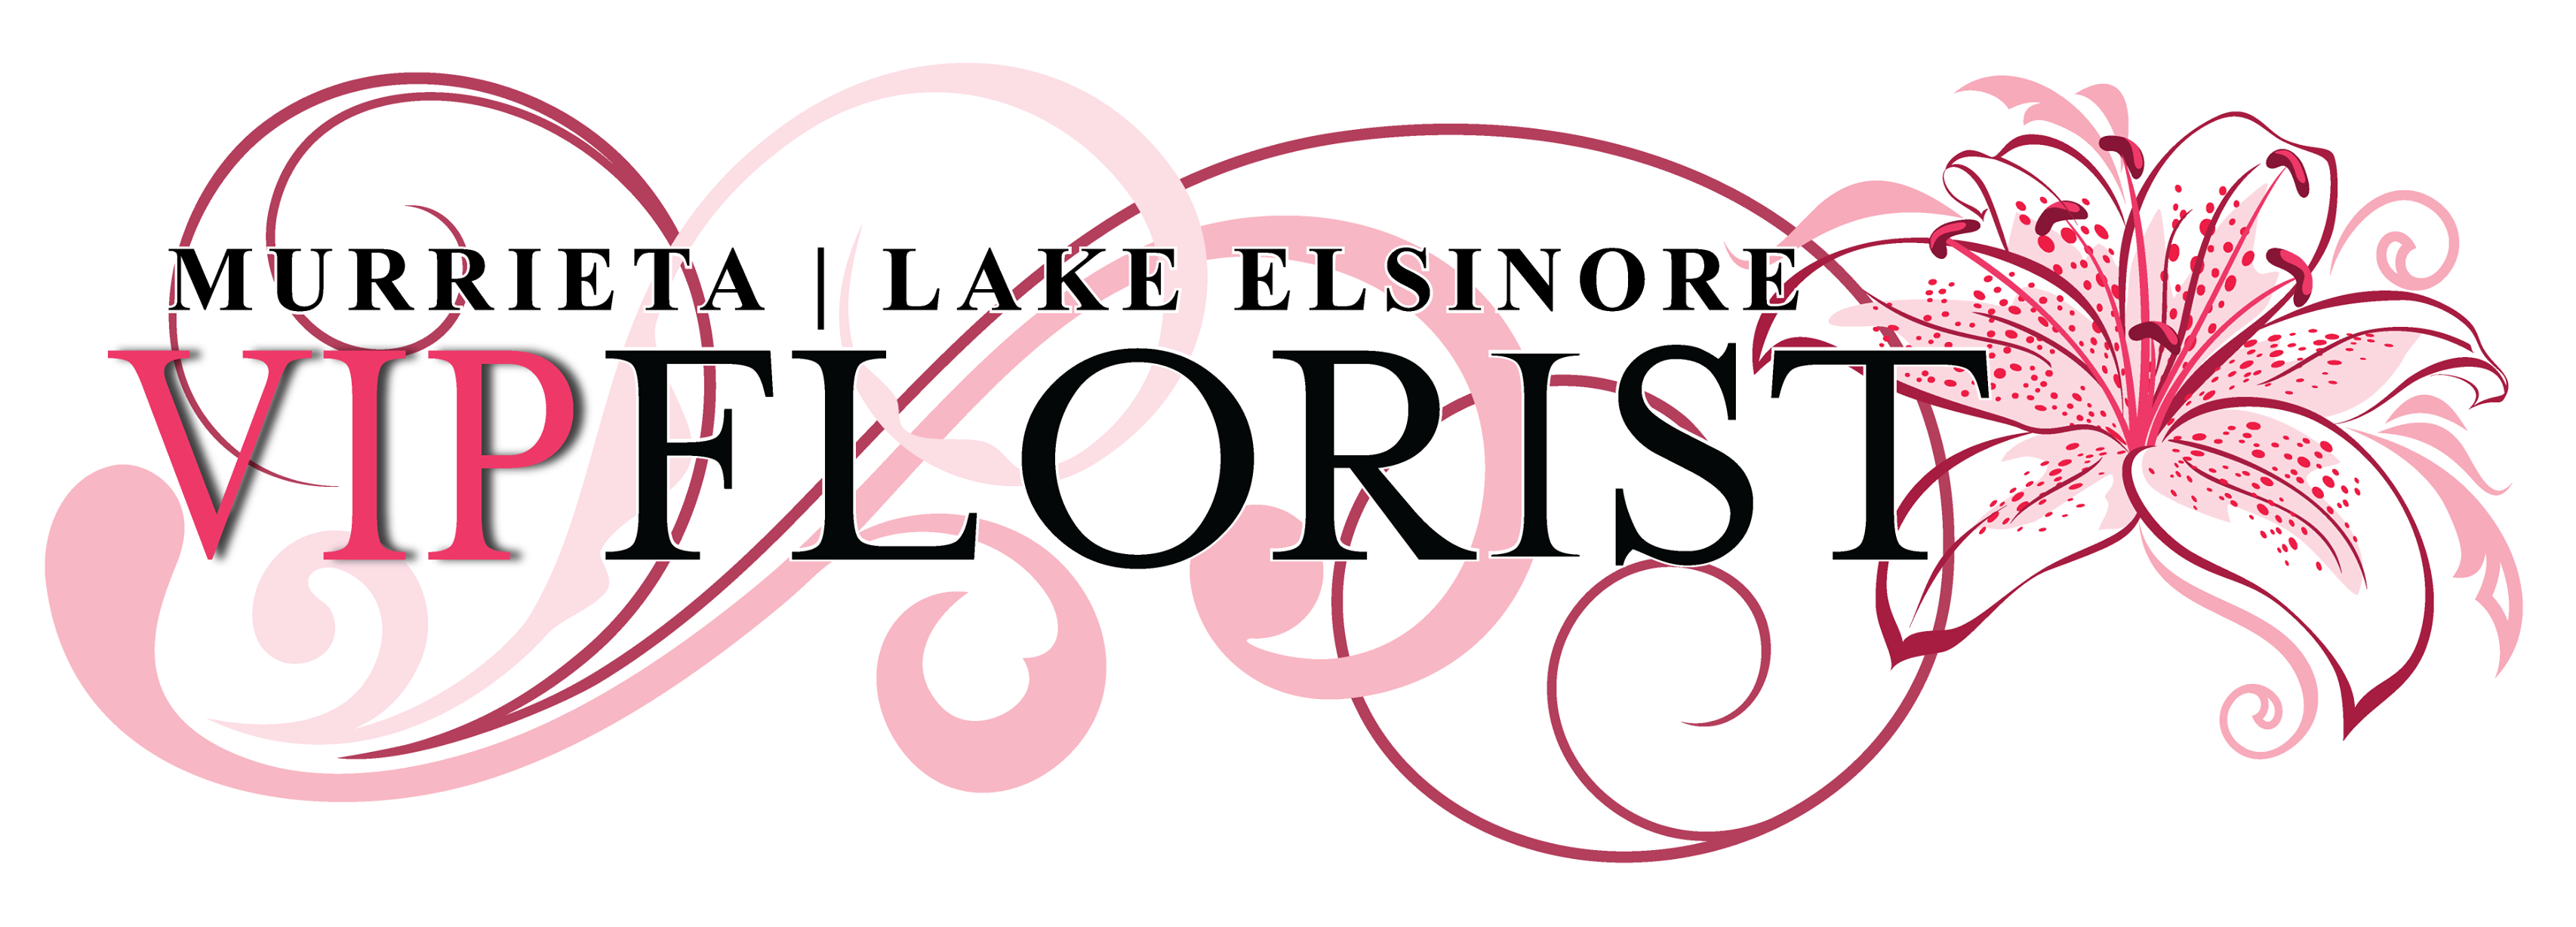 Weddings by Lake Elsinore VIP Florist |  Lake Elsinore, CA